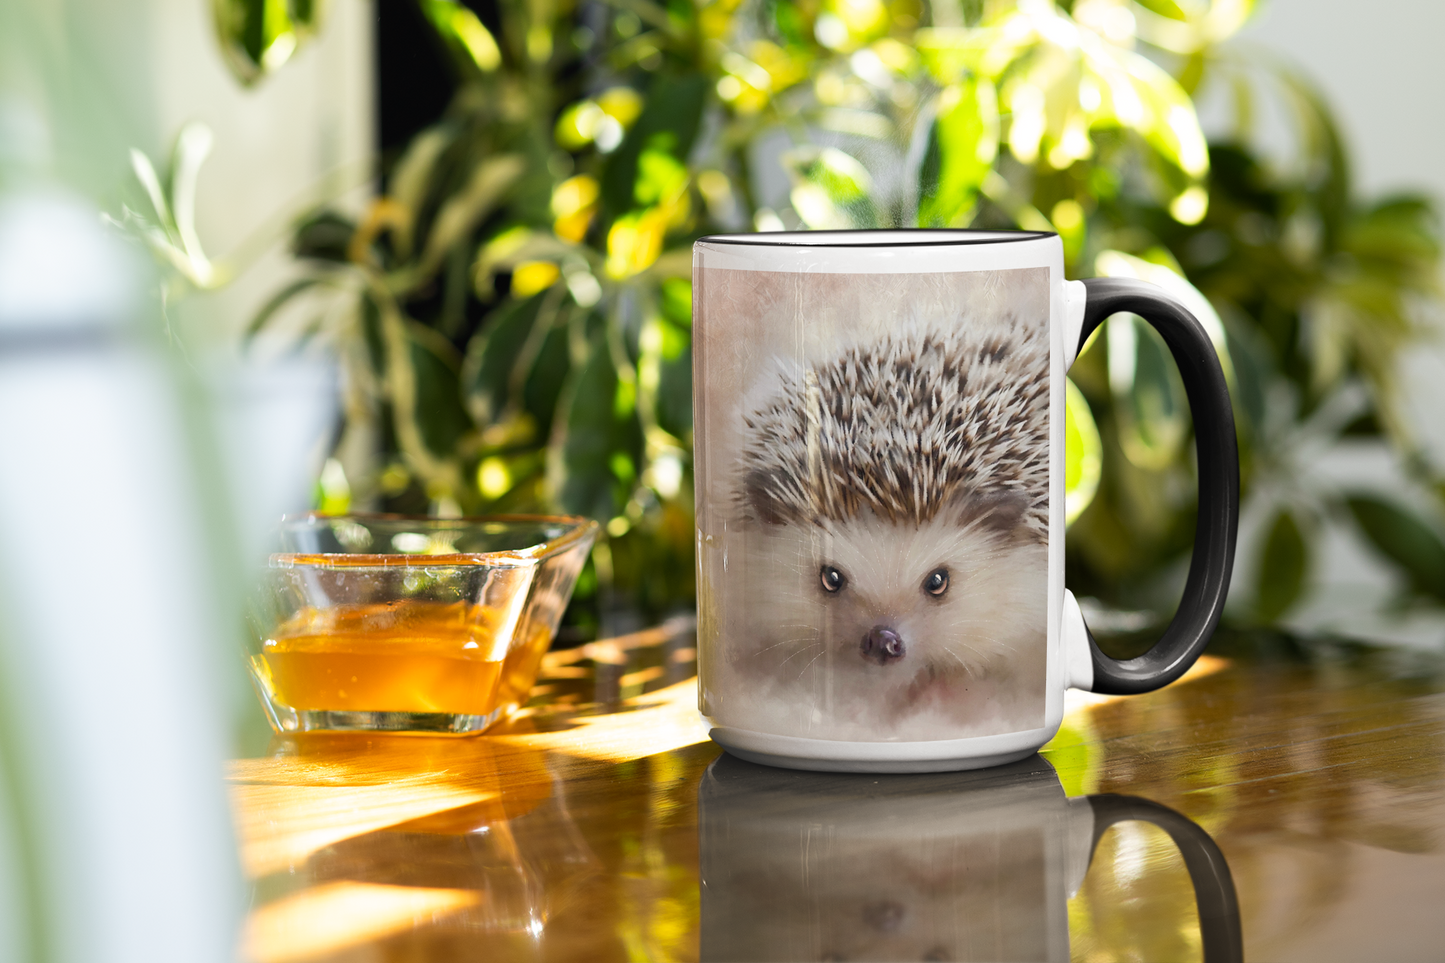 British Wildlife Art Hedgehog Personalised Ceramic Mug with Coordinating Colour Gift Idea